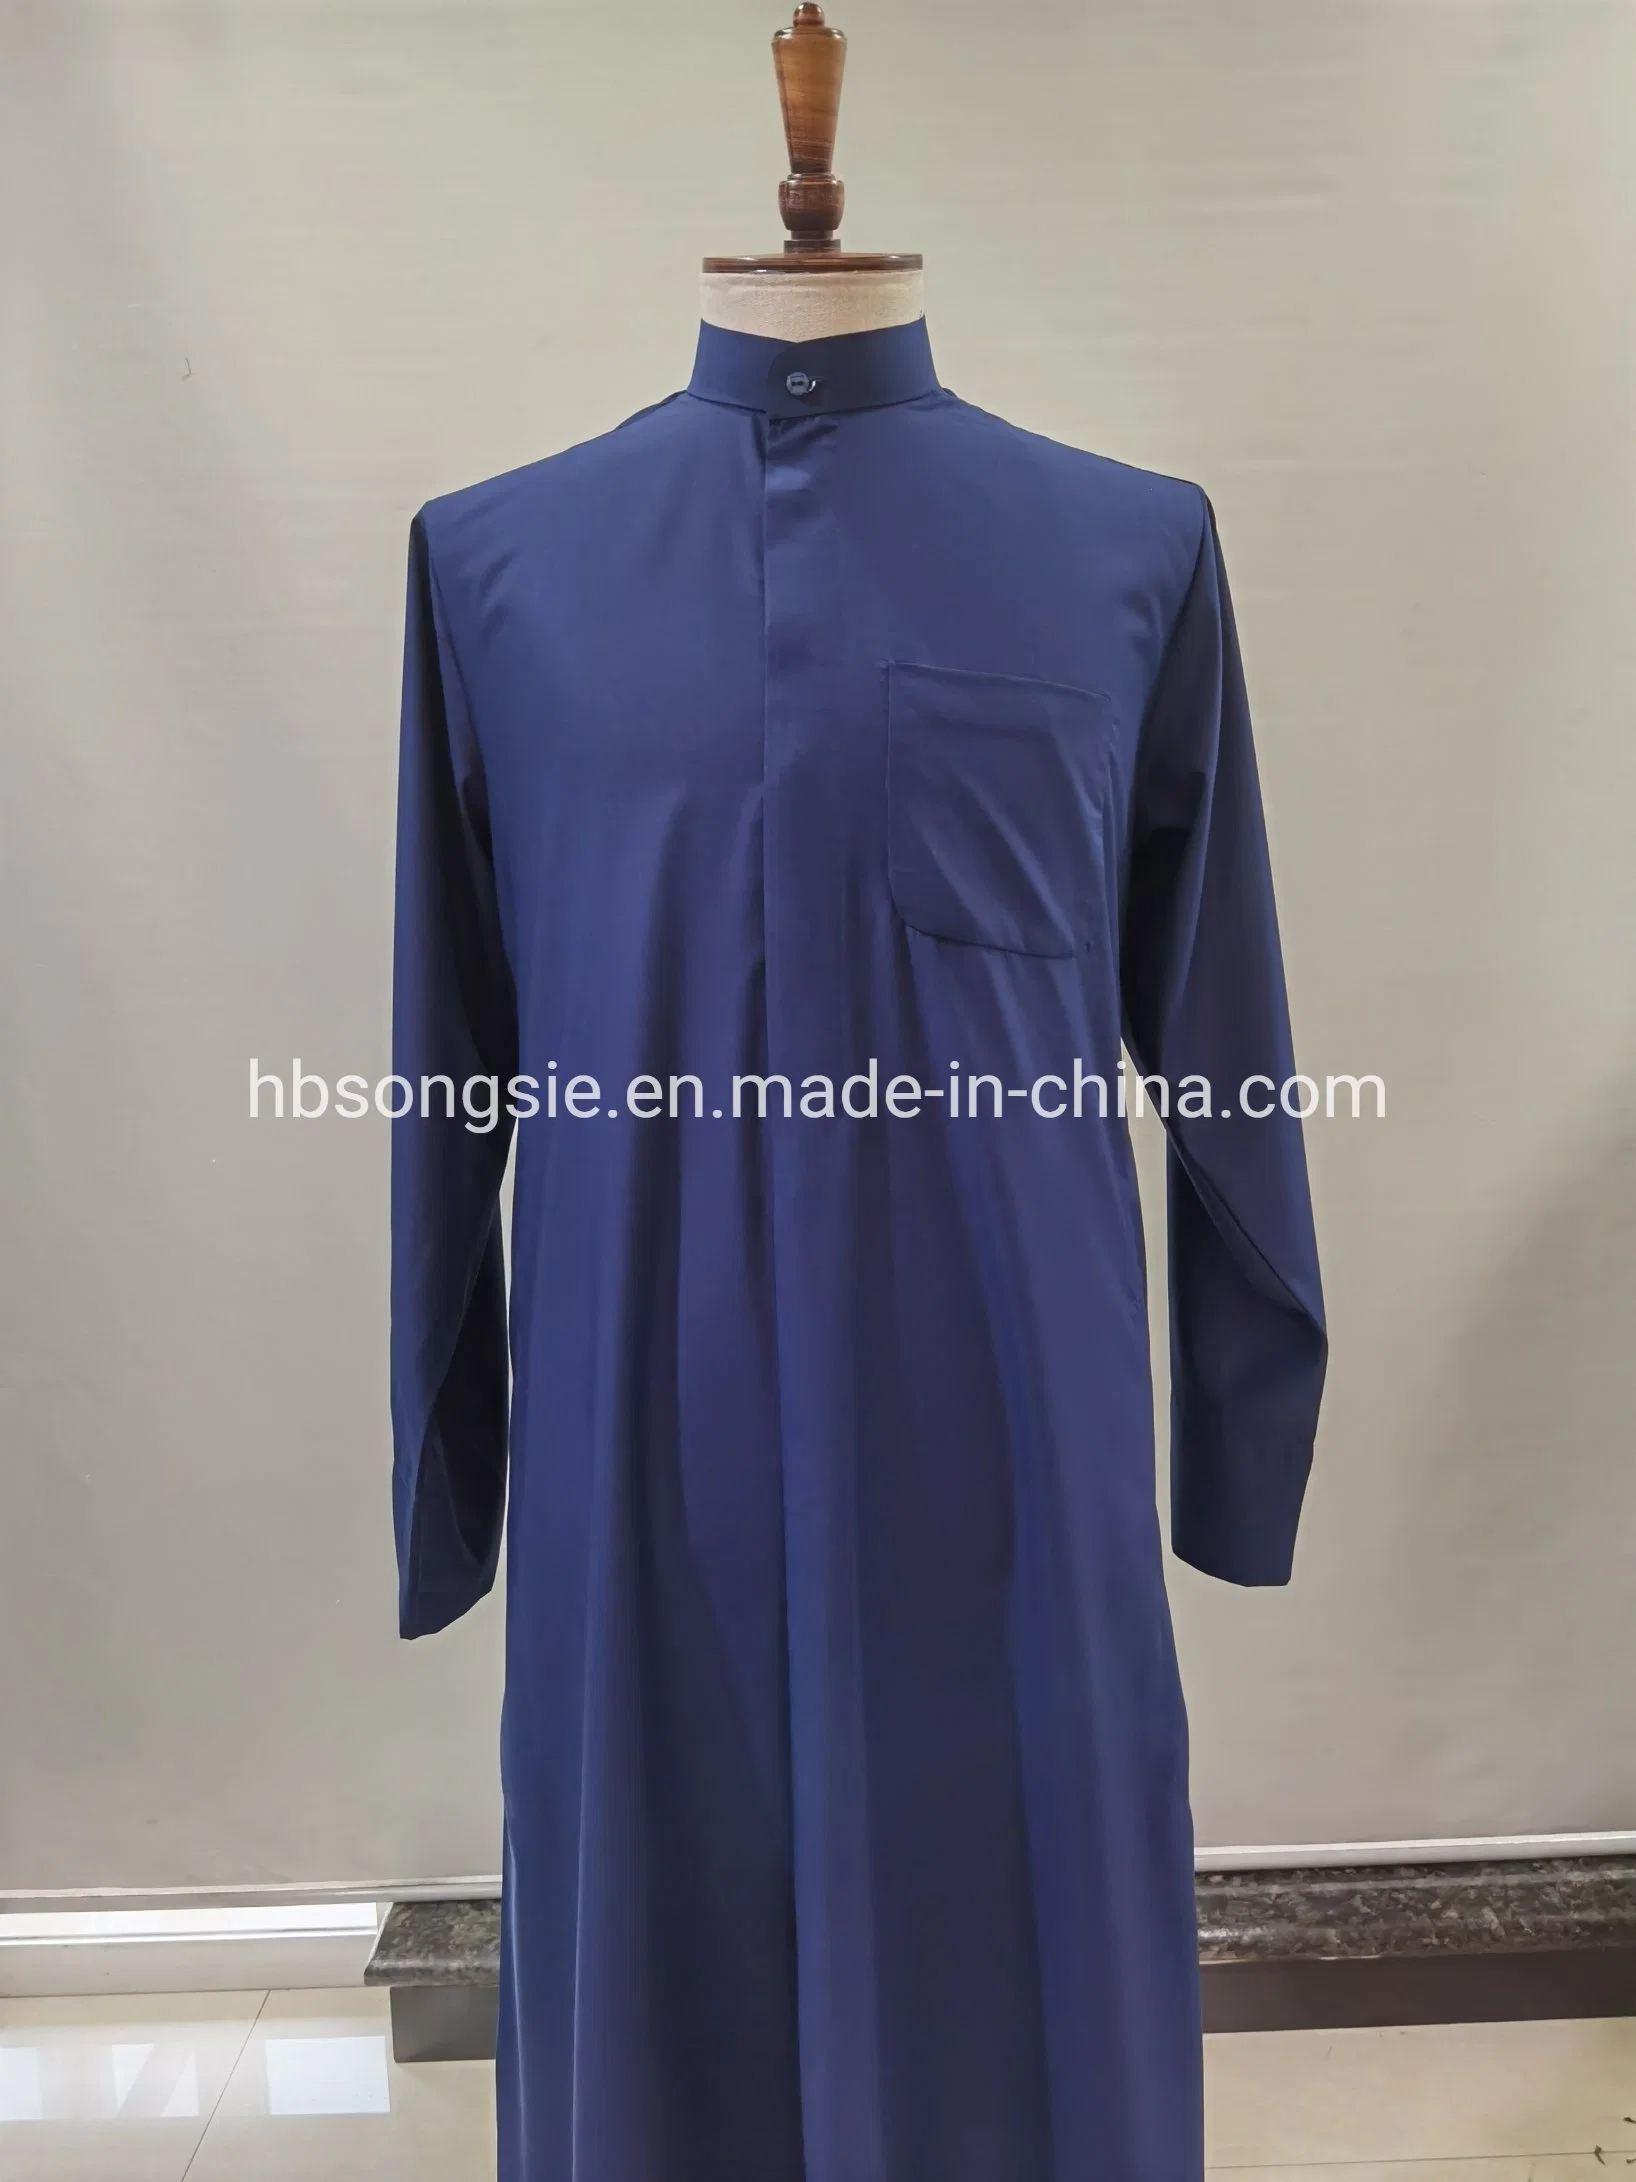 Stand Collar Muslim Dress for Men Dubai Abaya for Adult